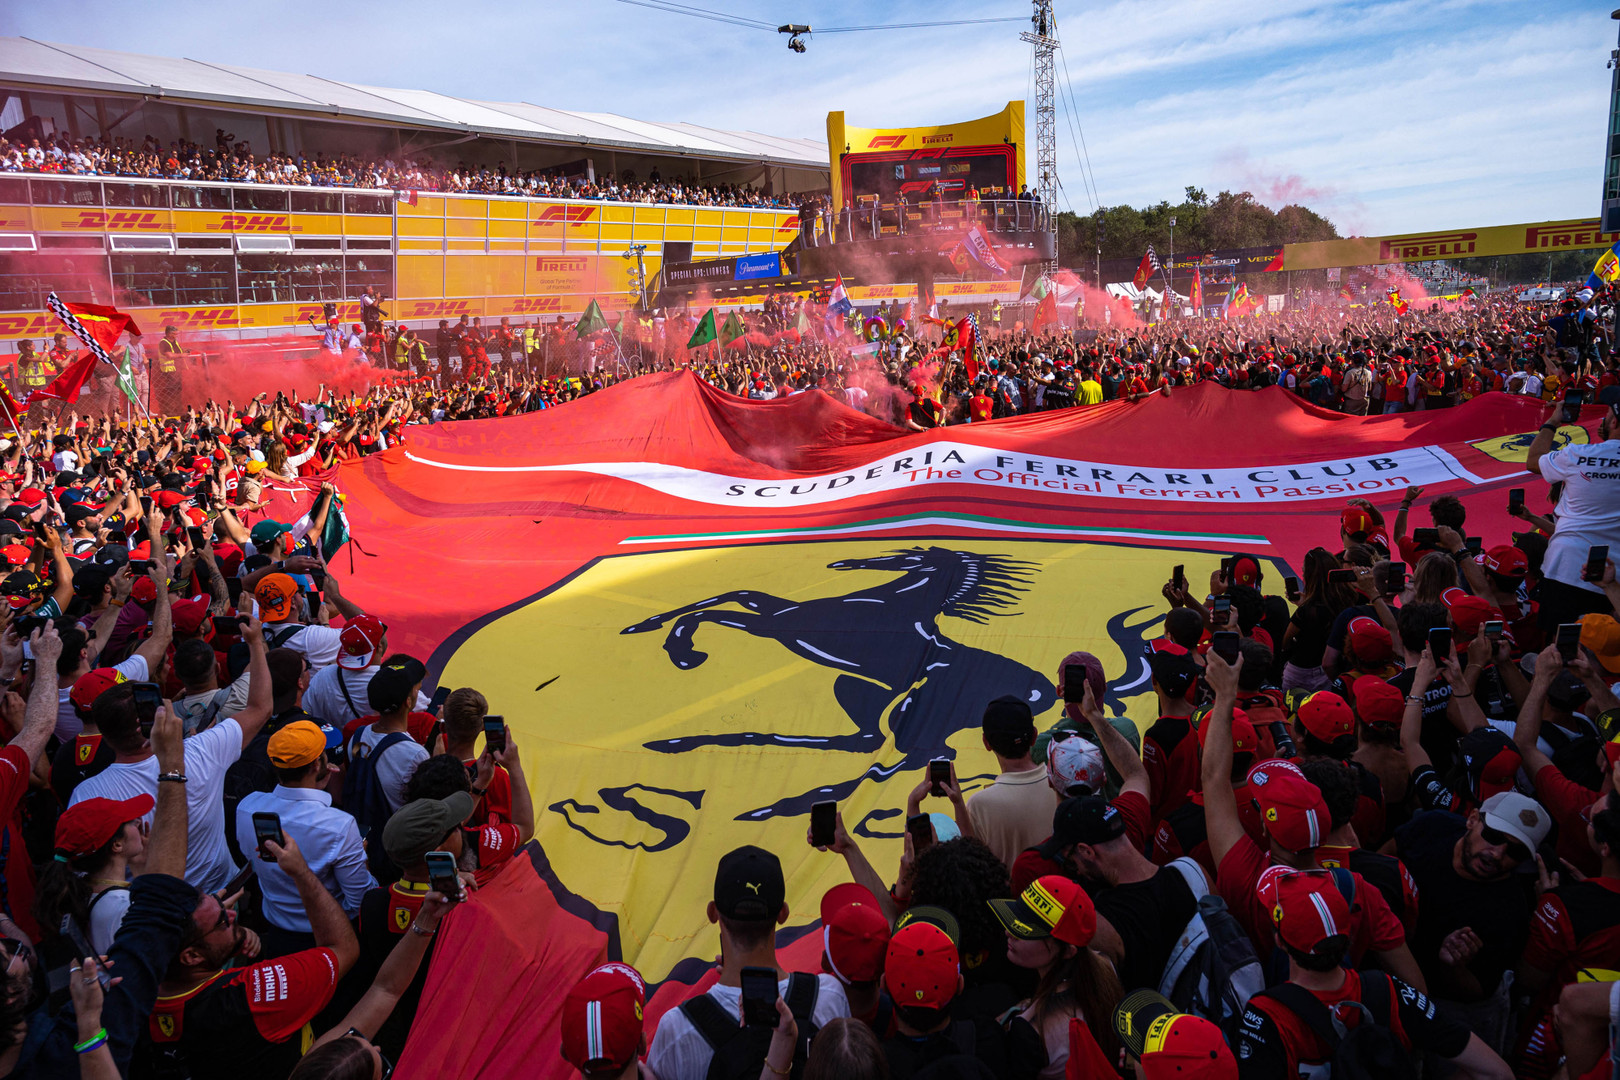 The podium of the Italian Grand Prix. Tifosi enrolling a giant Ferrari banner.